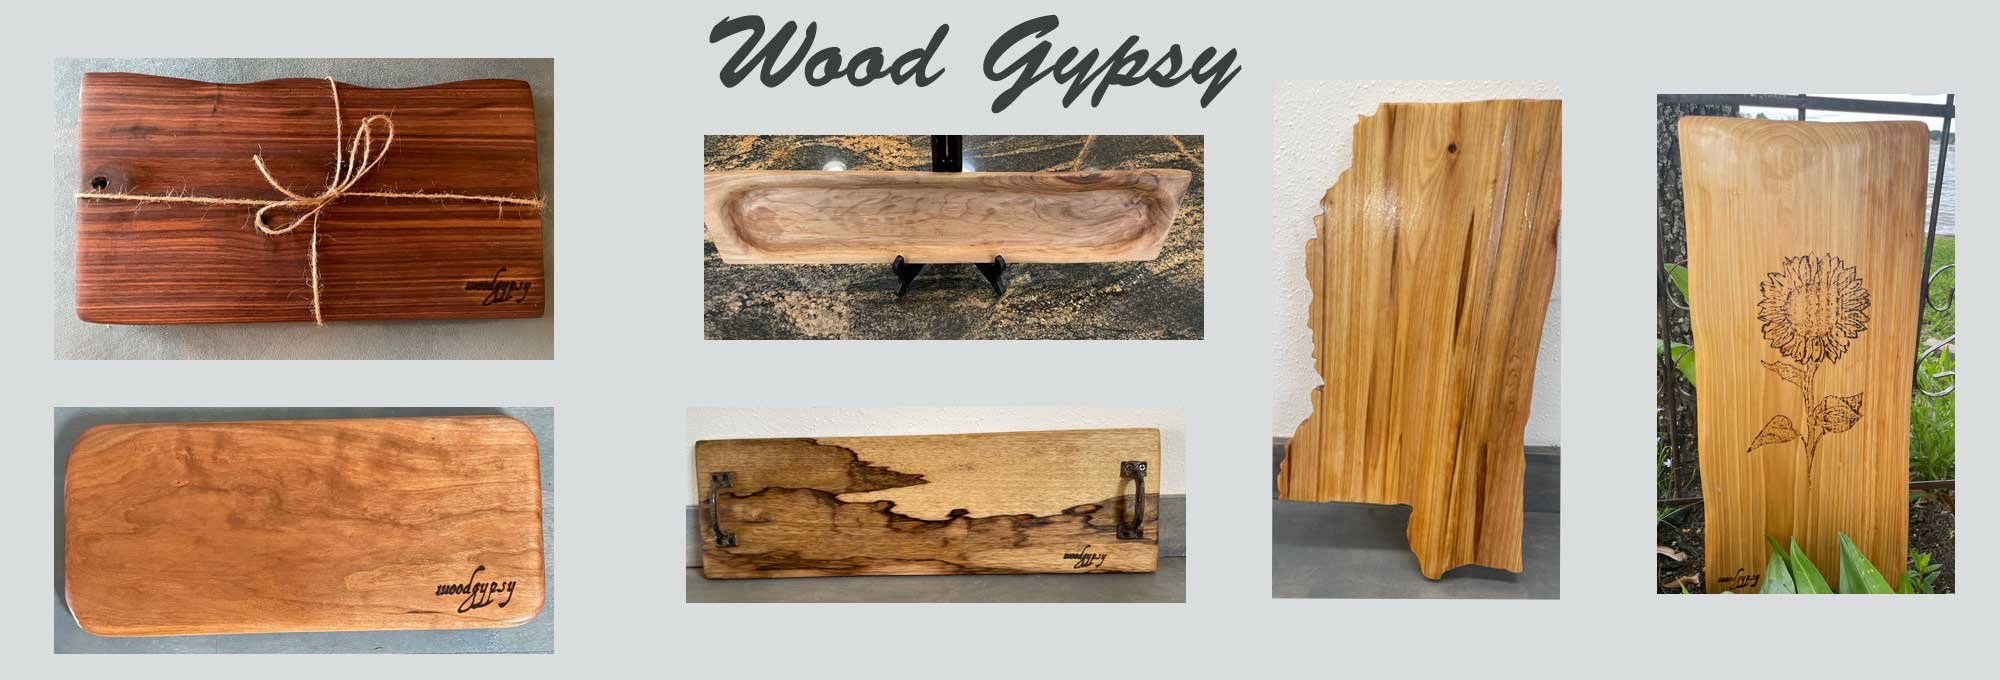 citycpts-woodgypsy